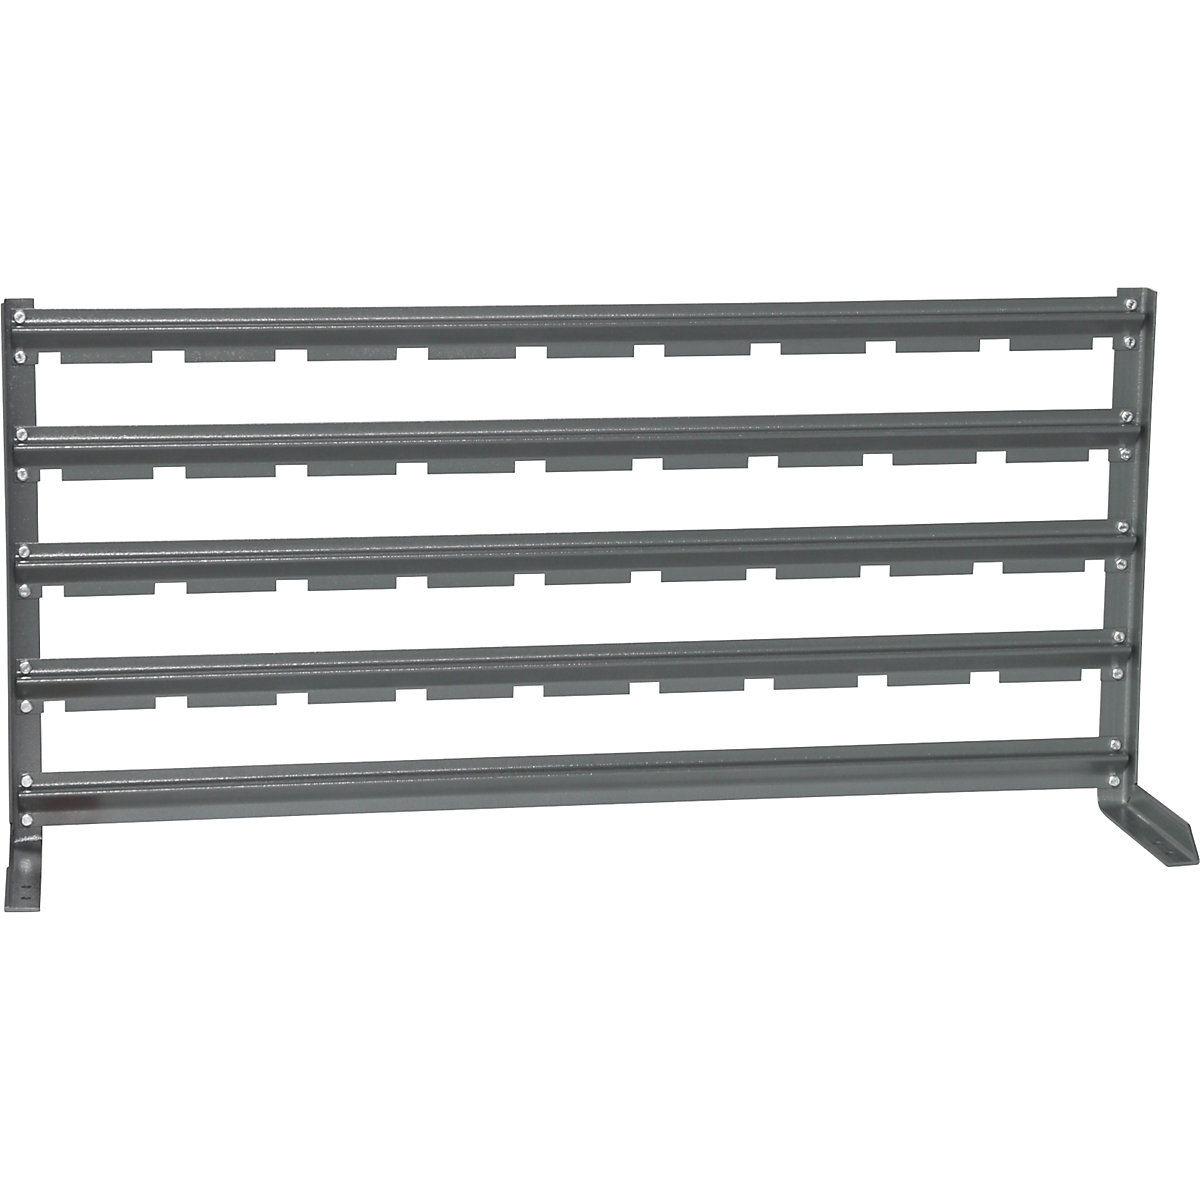 Small parts shelf unit, width 1020 mm